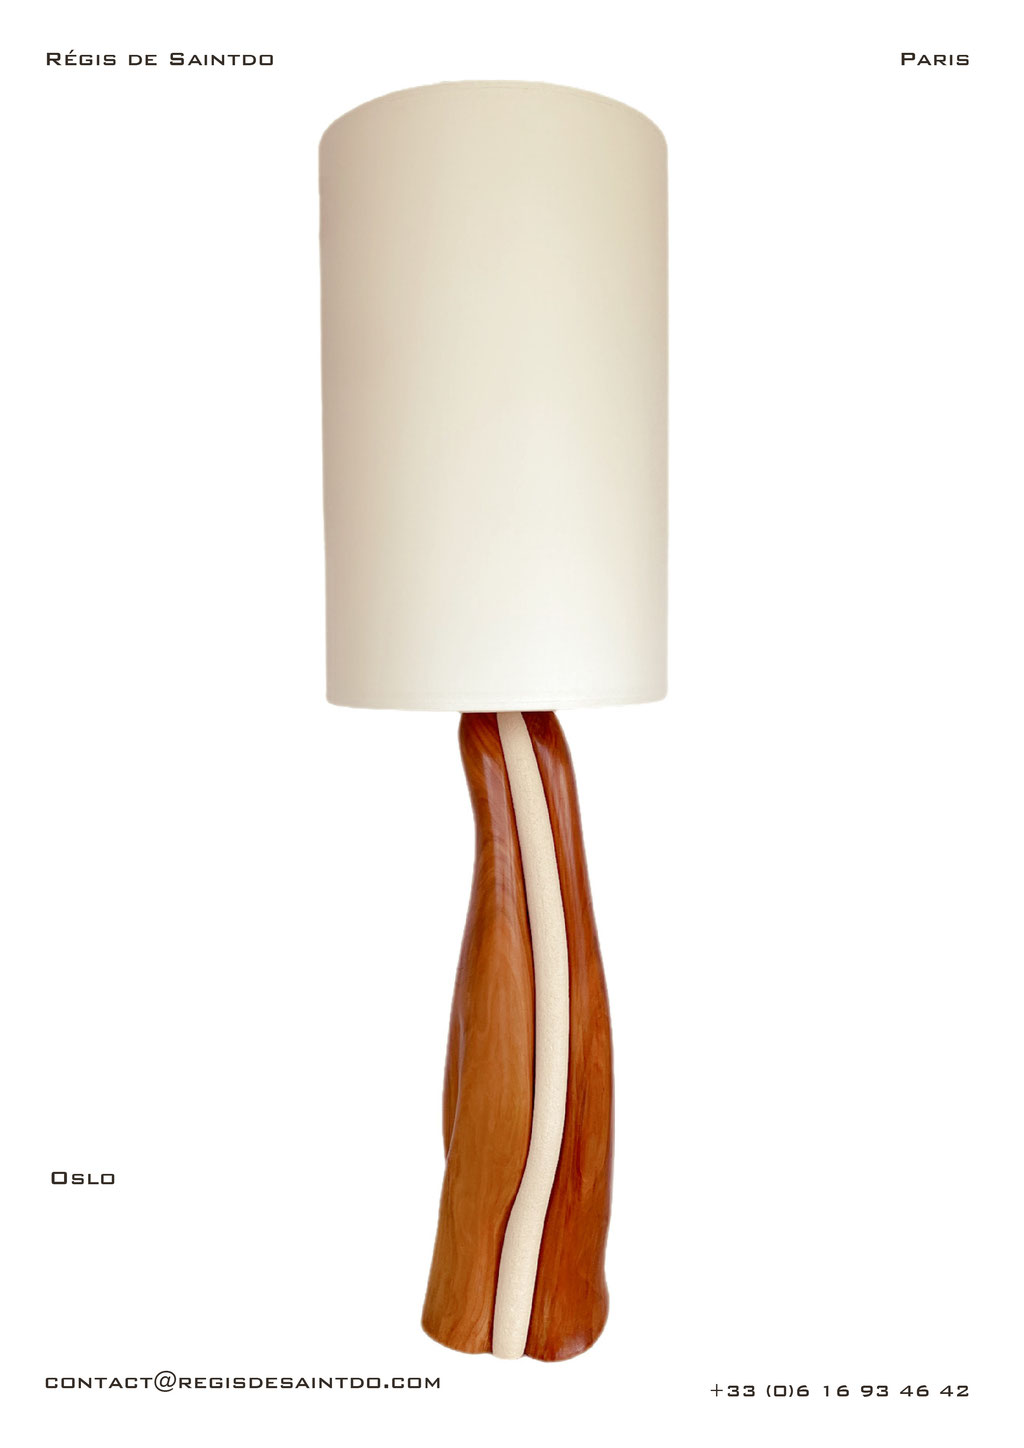 Lamp Oslo-ceramic-Cherry wood -handmade @Régis de Saintdo